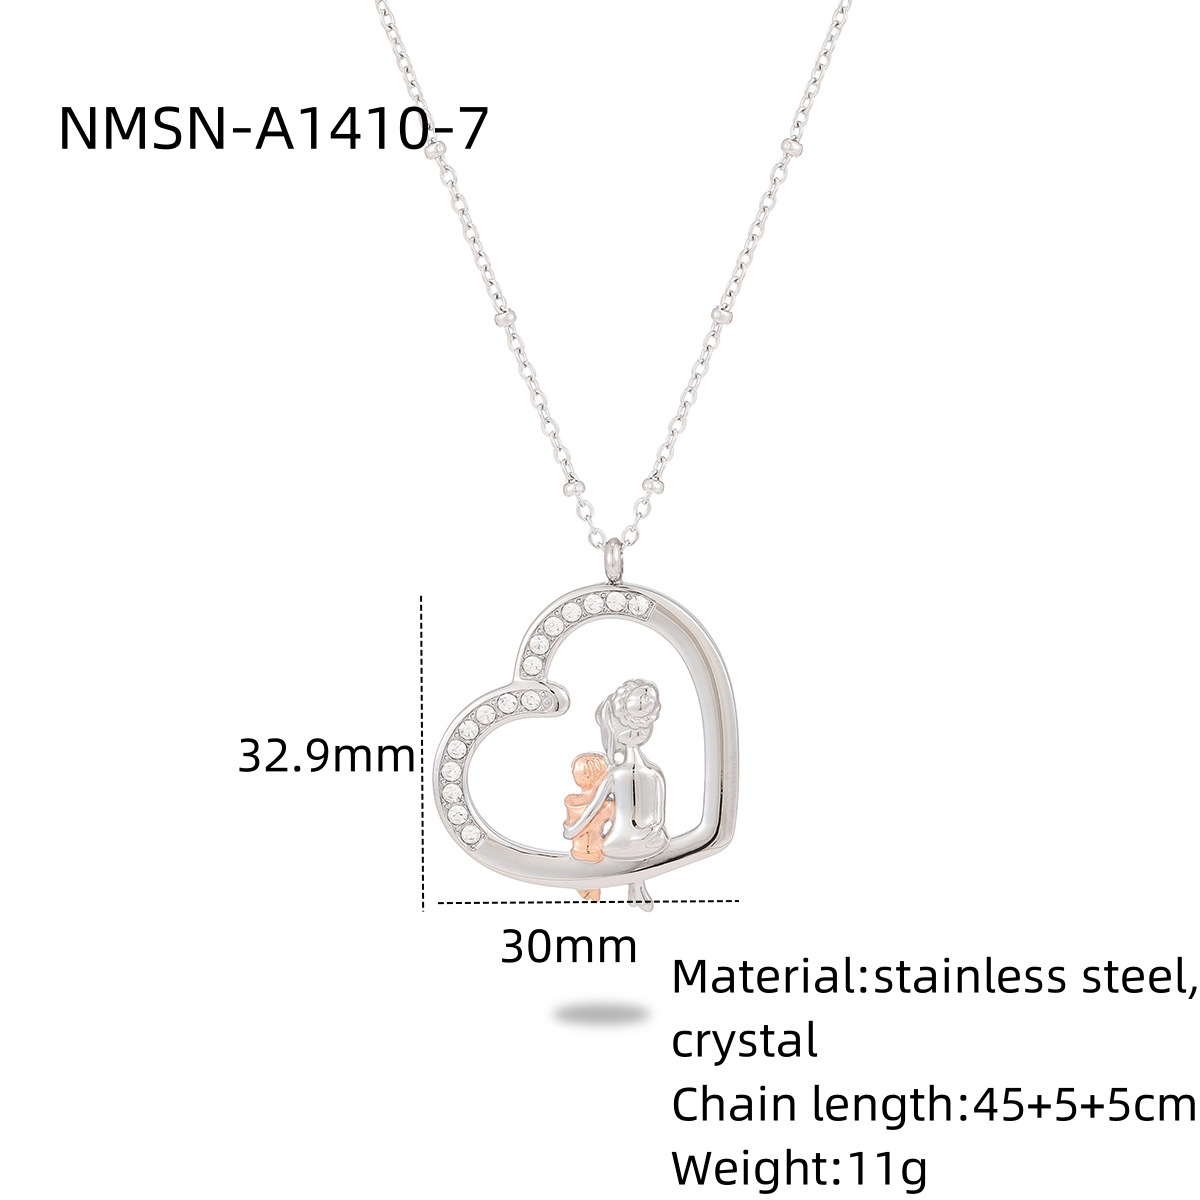 NMSN-A1410-7